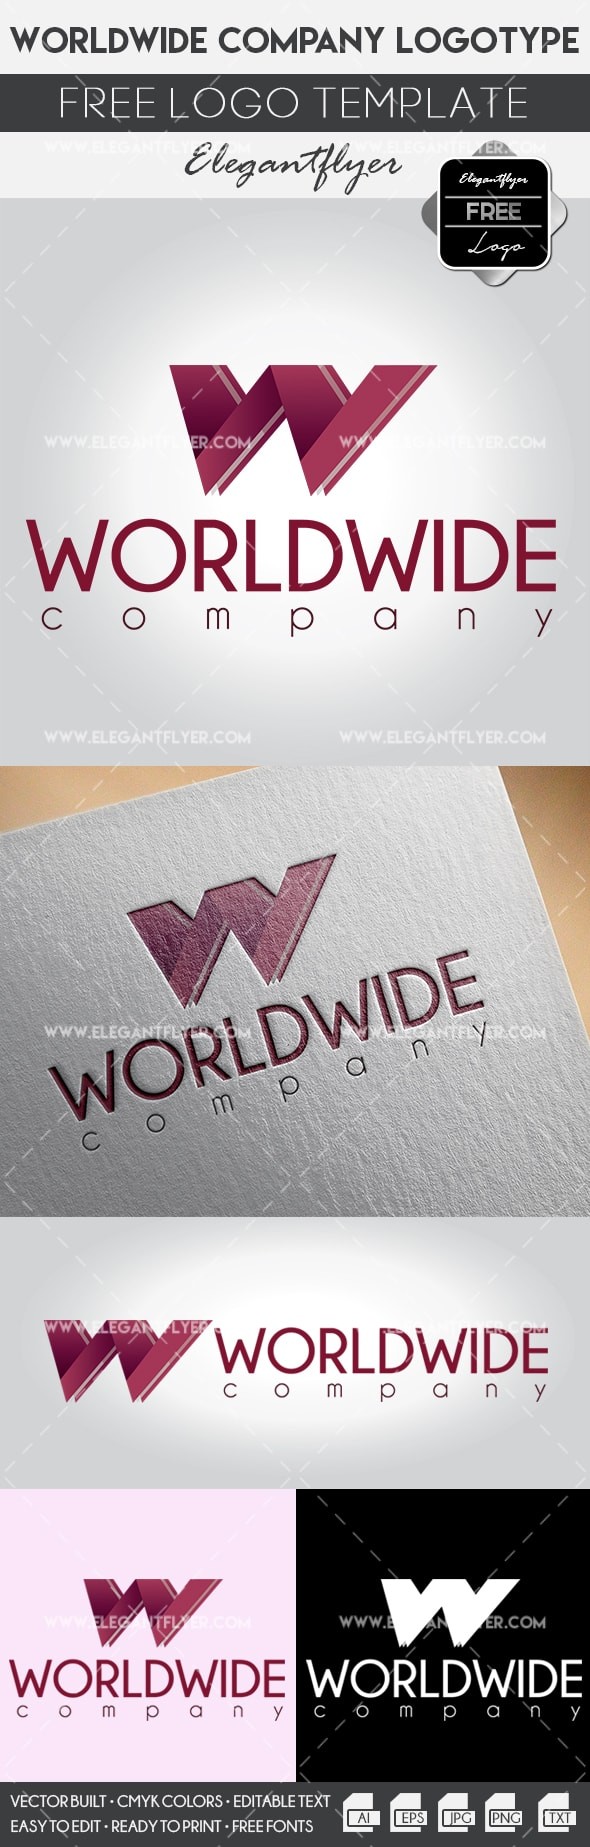 Worldwide Company by ElegantFlyer